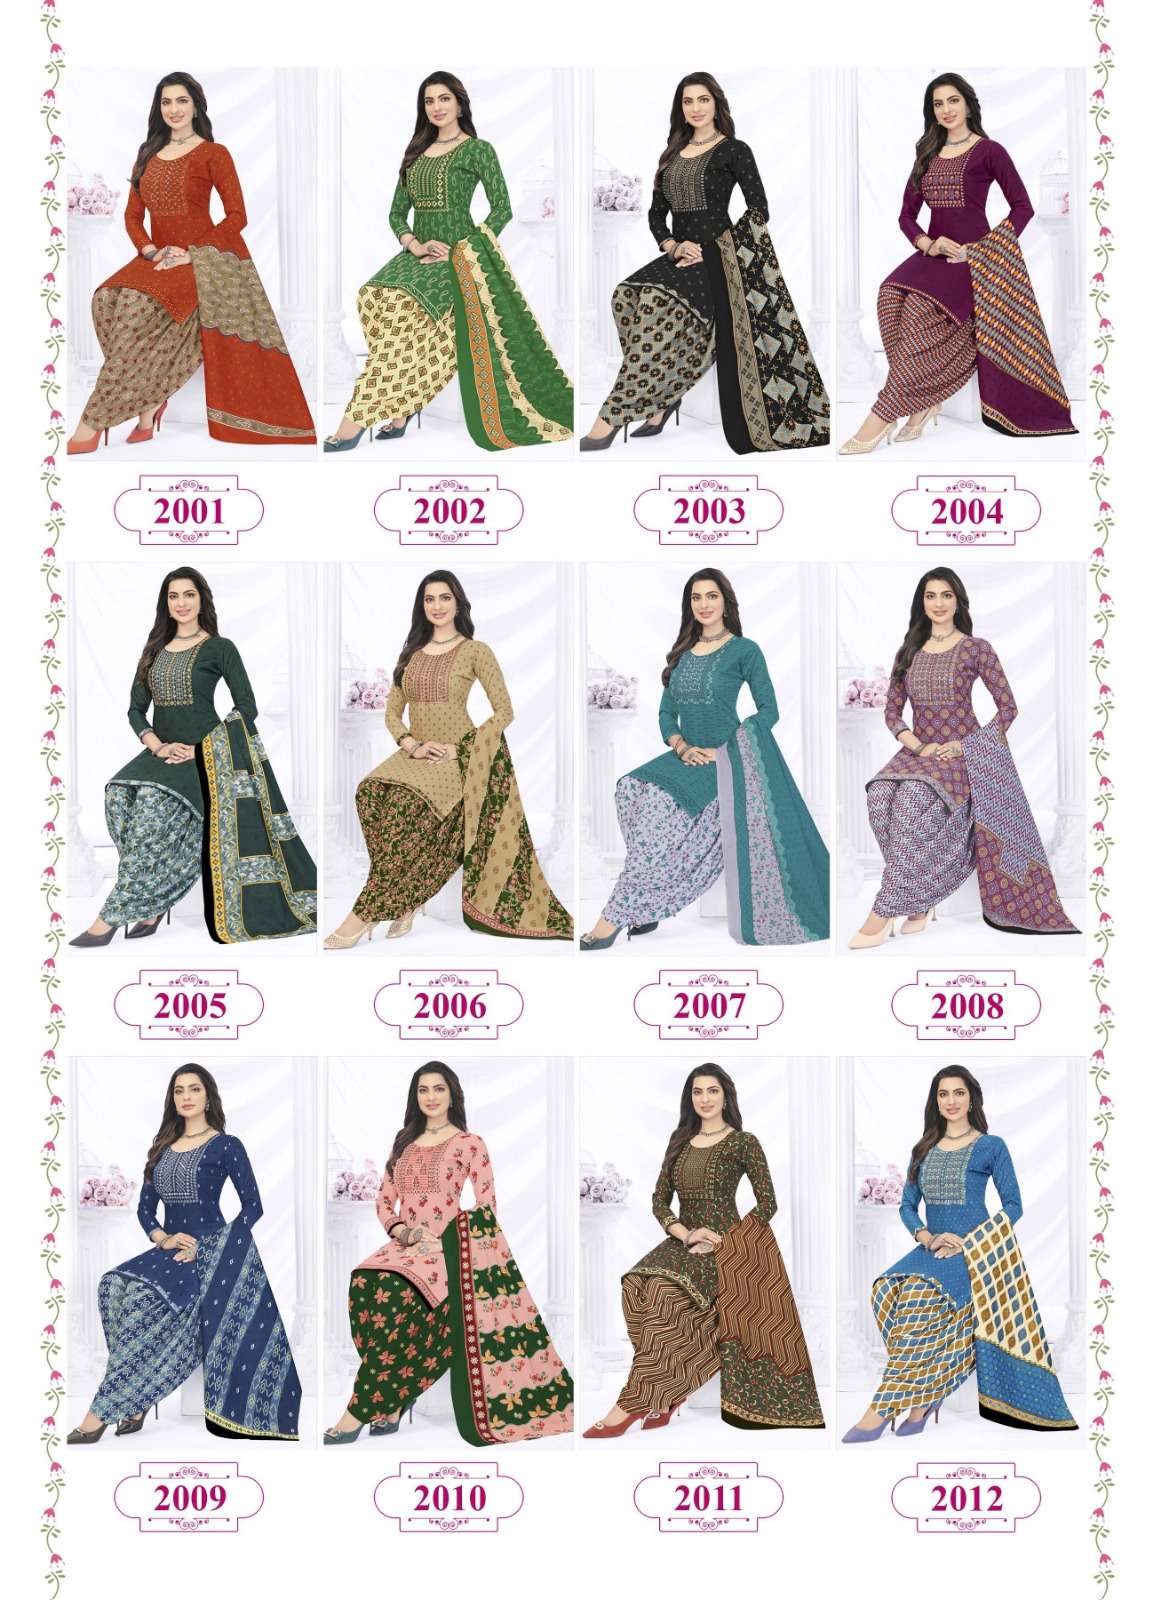 kanika special embroidery vol 2 2001-2012 series mix cotton patiyala stich salwar kameez online best rate surat manufacturer